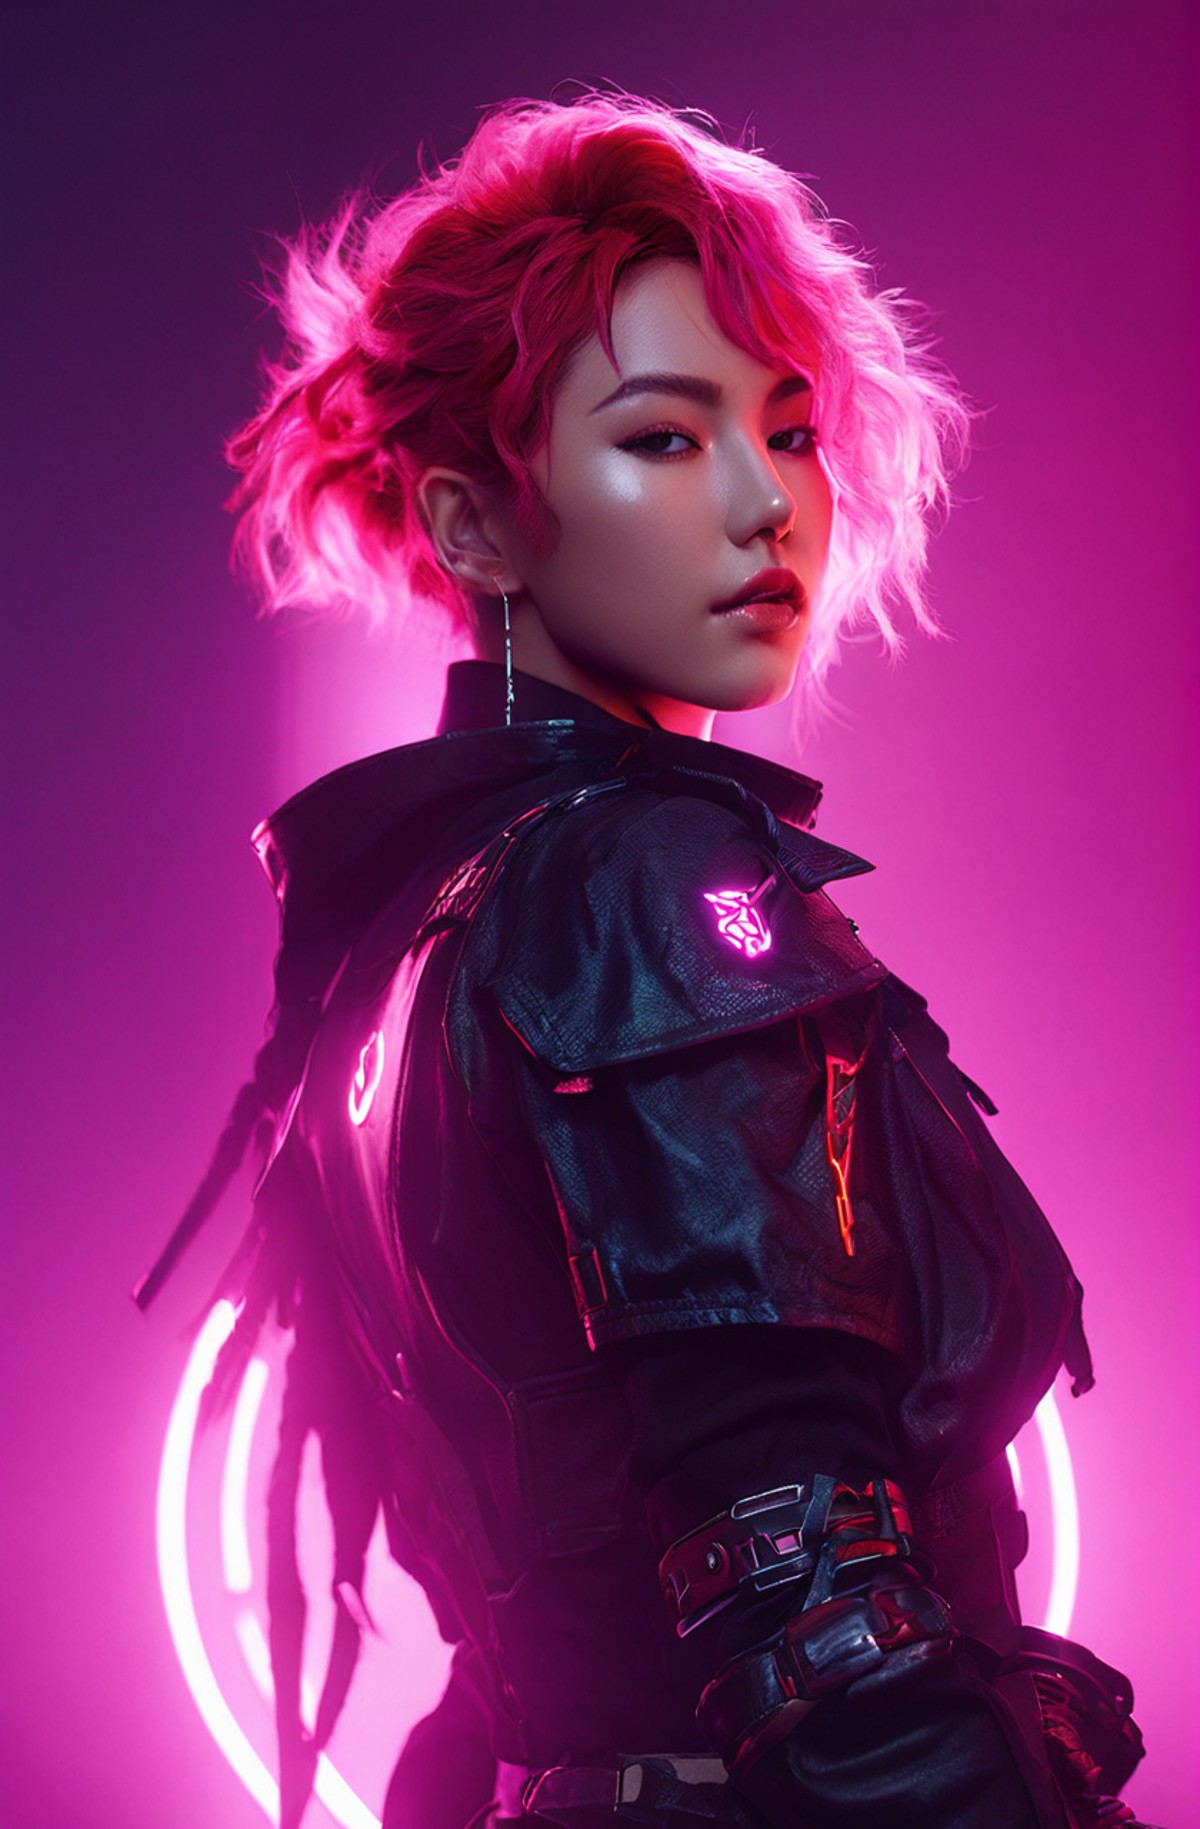 neonpunk style summoner,a girl,random fictional girl named Tanaka Haruki from Japan,foxy,arresting,knockout,red  sleek hai...